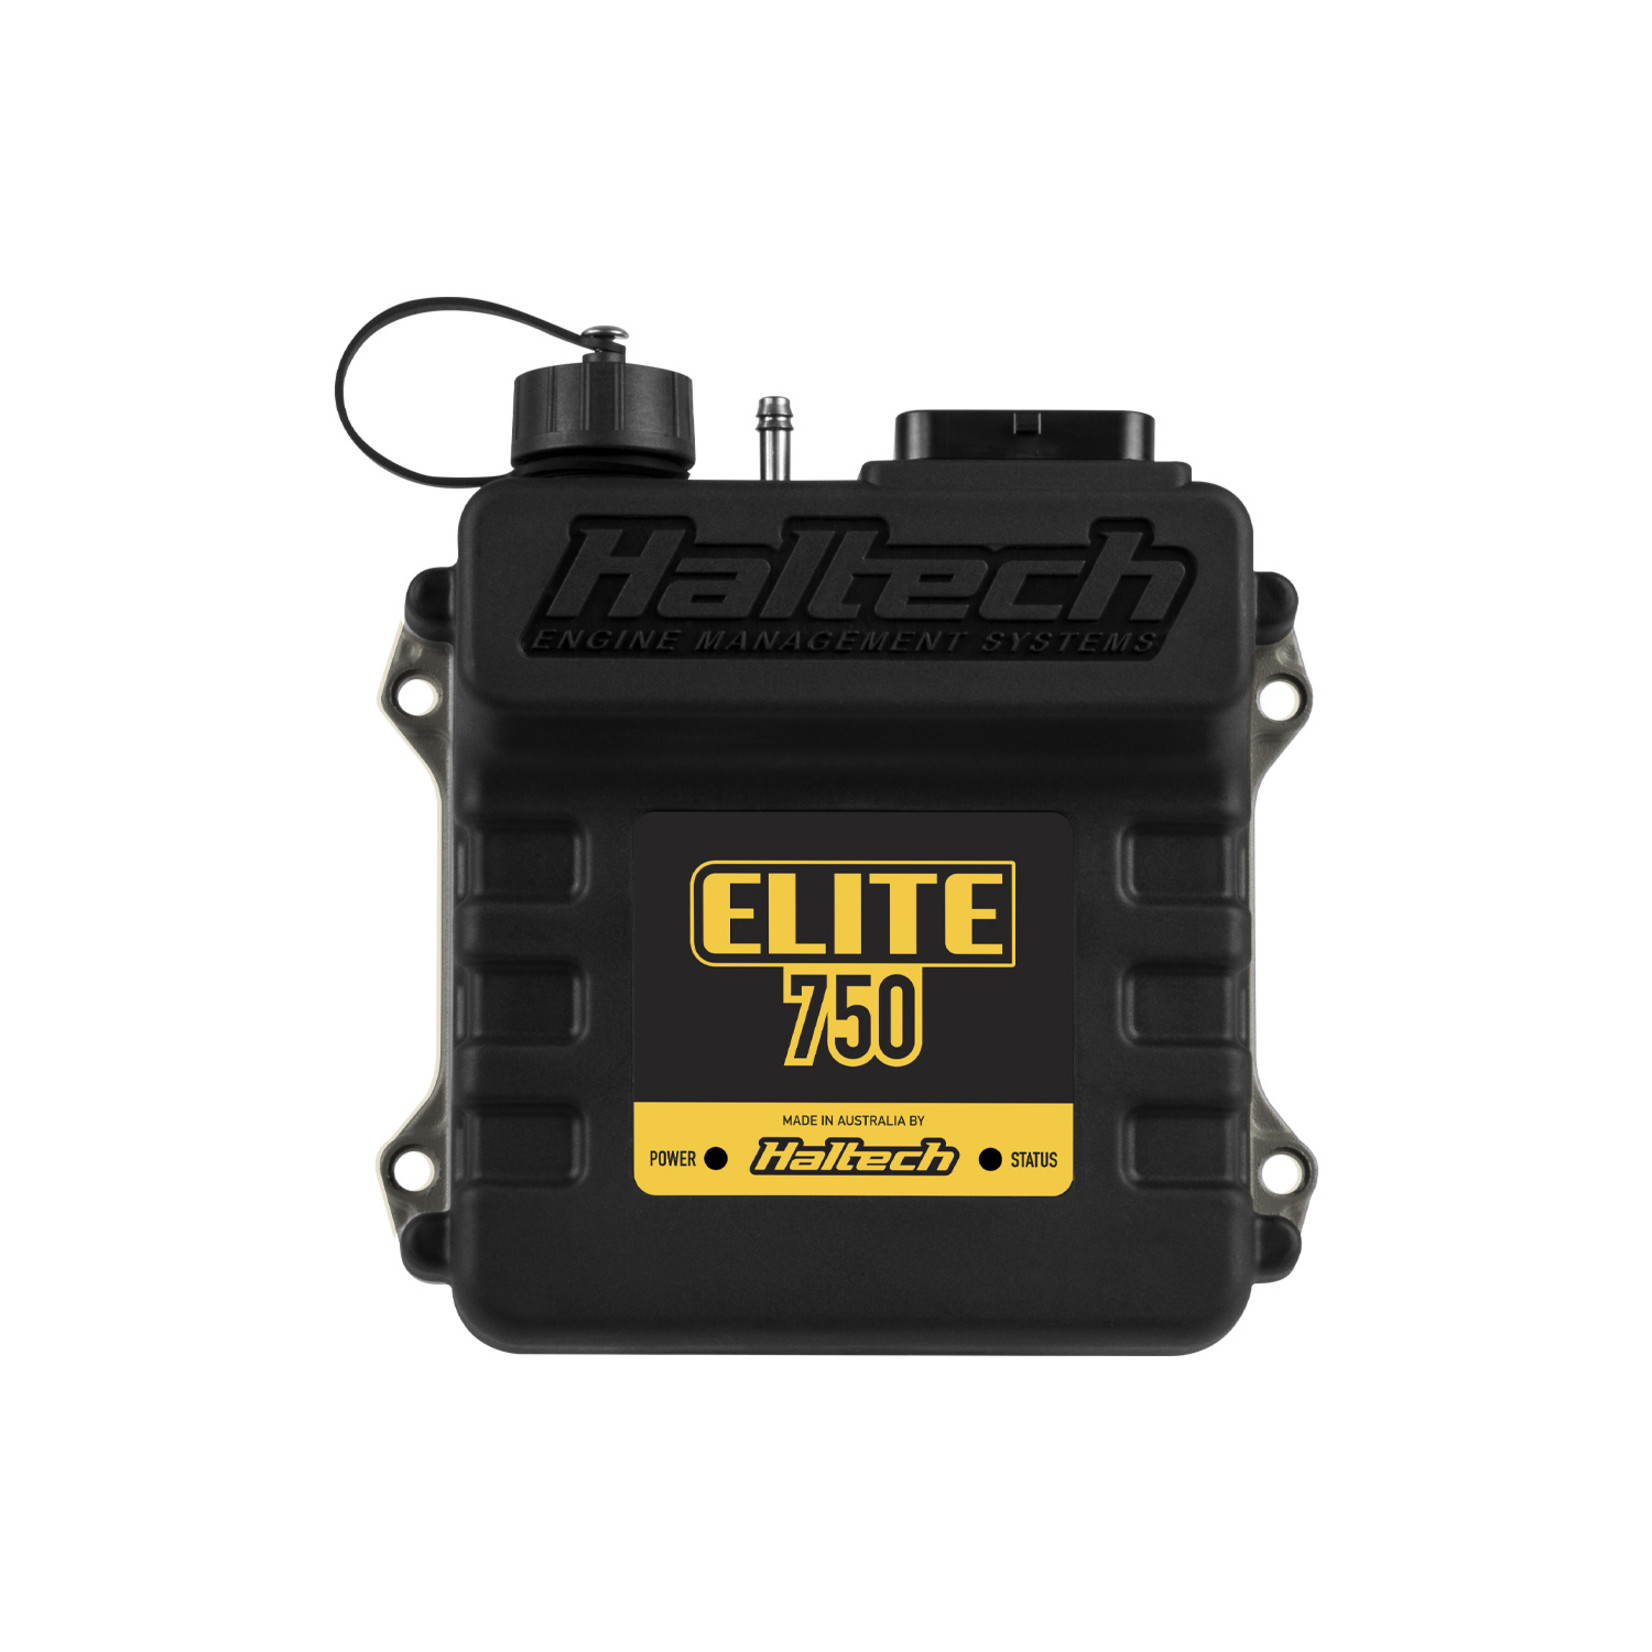 Haltech Elite 750 + Basic Universal Wire-in Harness Kit Length: 2.5m (8')